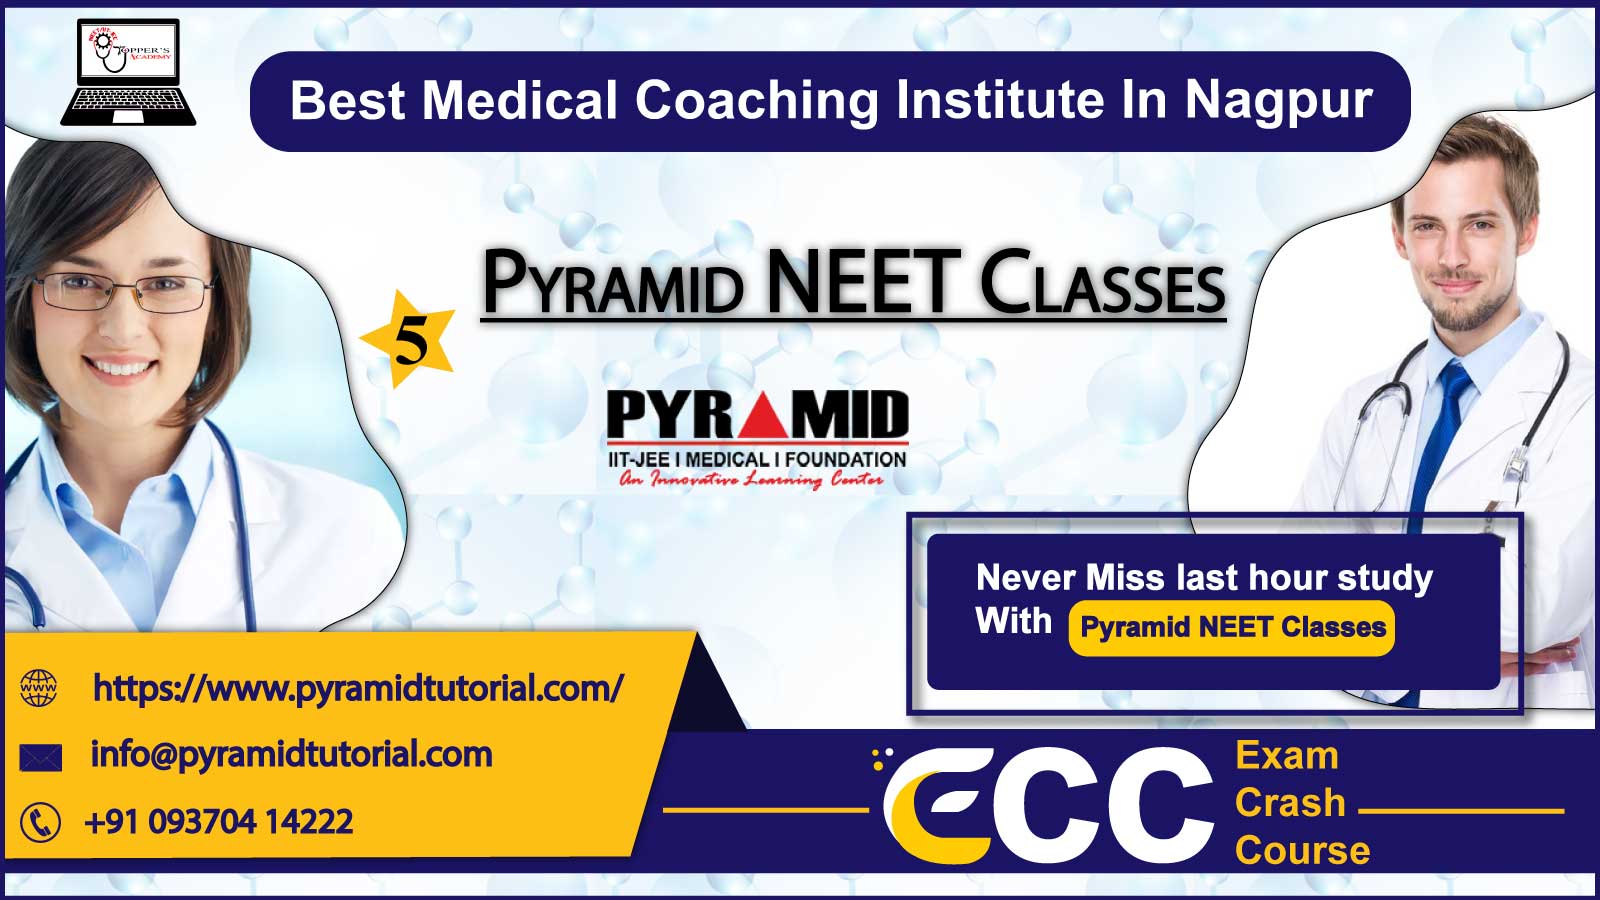 Pyramid NEET Coaching in Nagpur